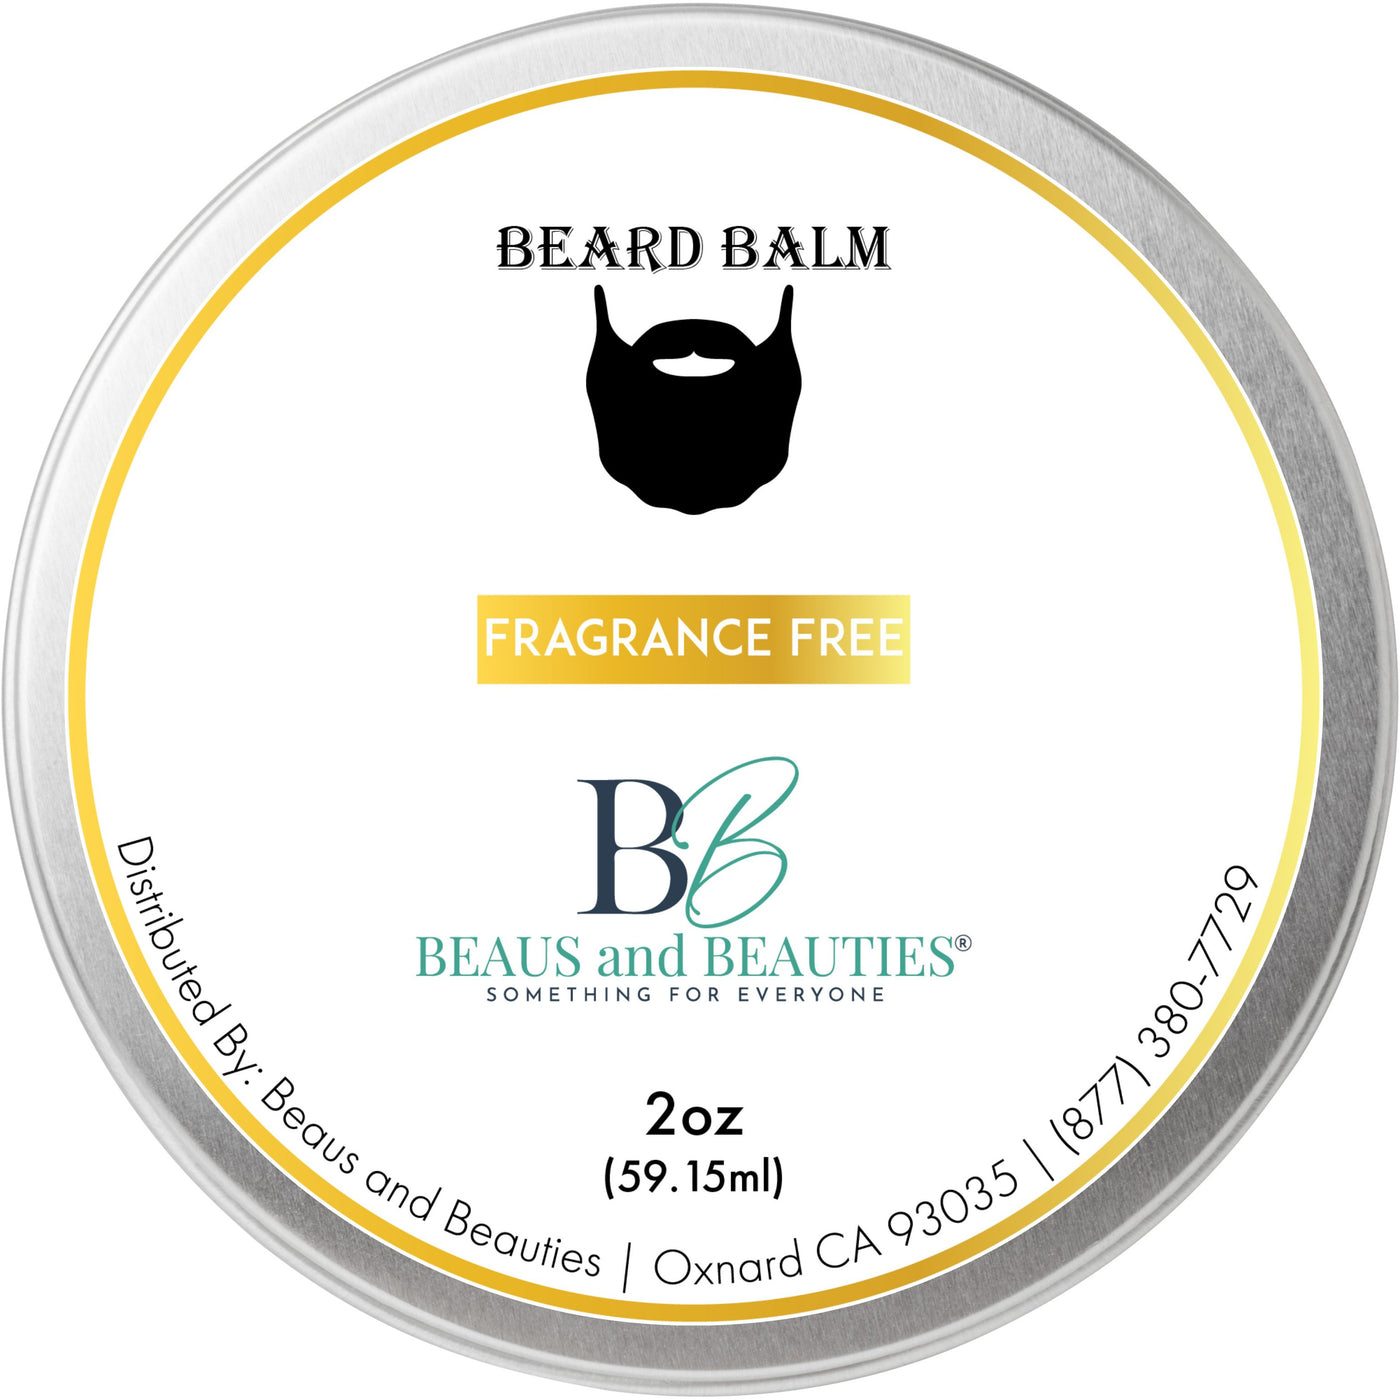 2 oz Beard Balm Fragrance Free